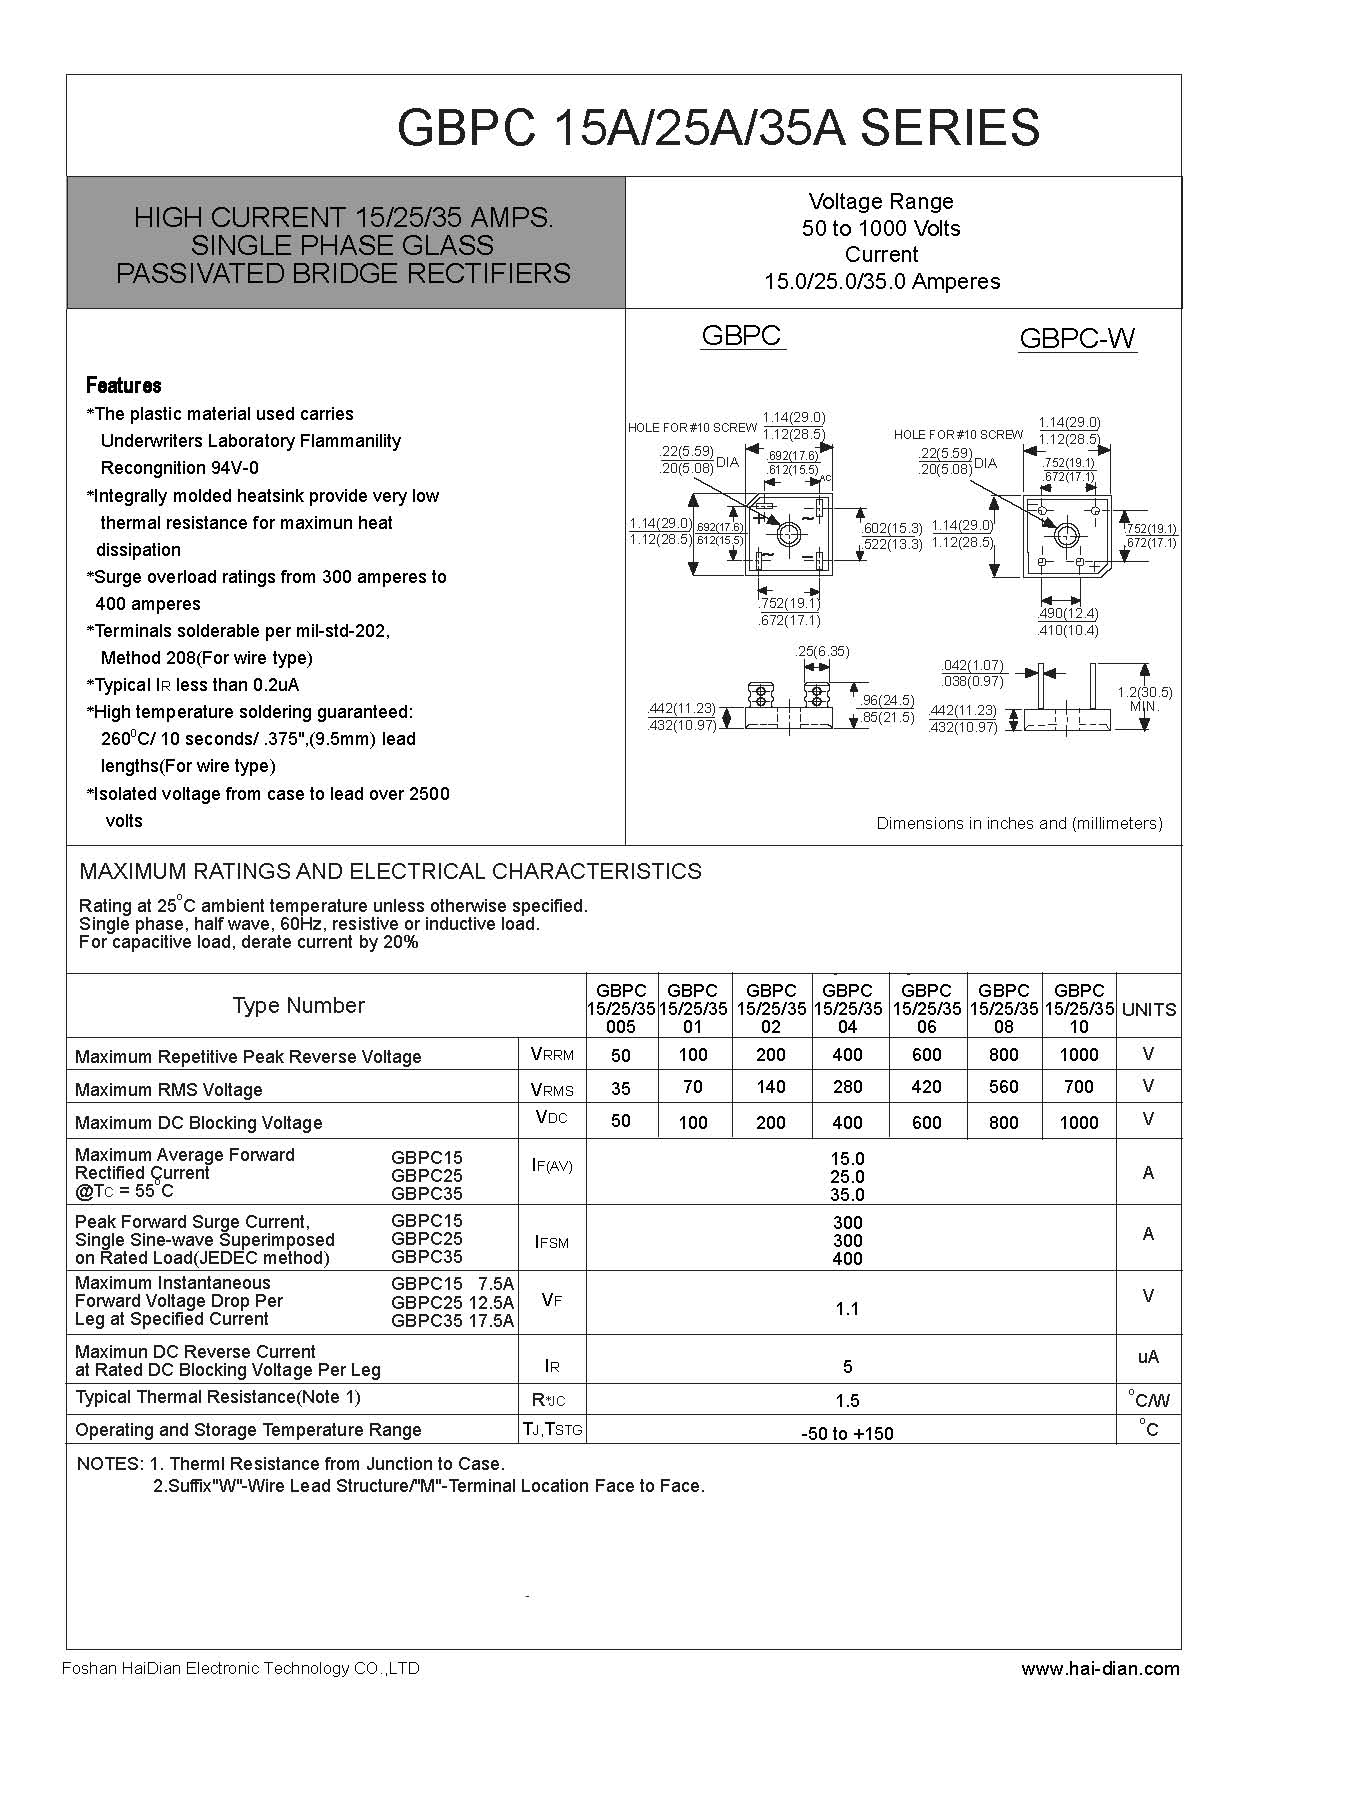 GBPC2510桥式整流器(整流桥堆)-- 佛山海电电子科技有限公司